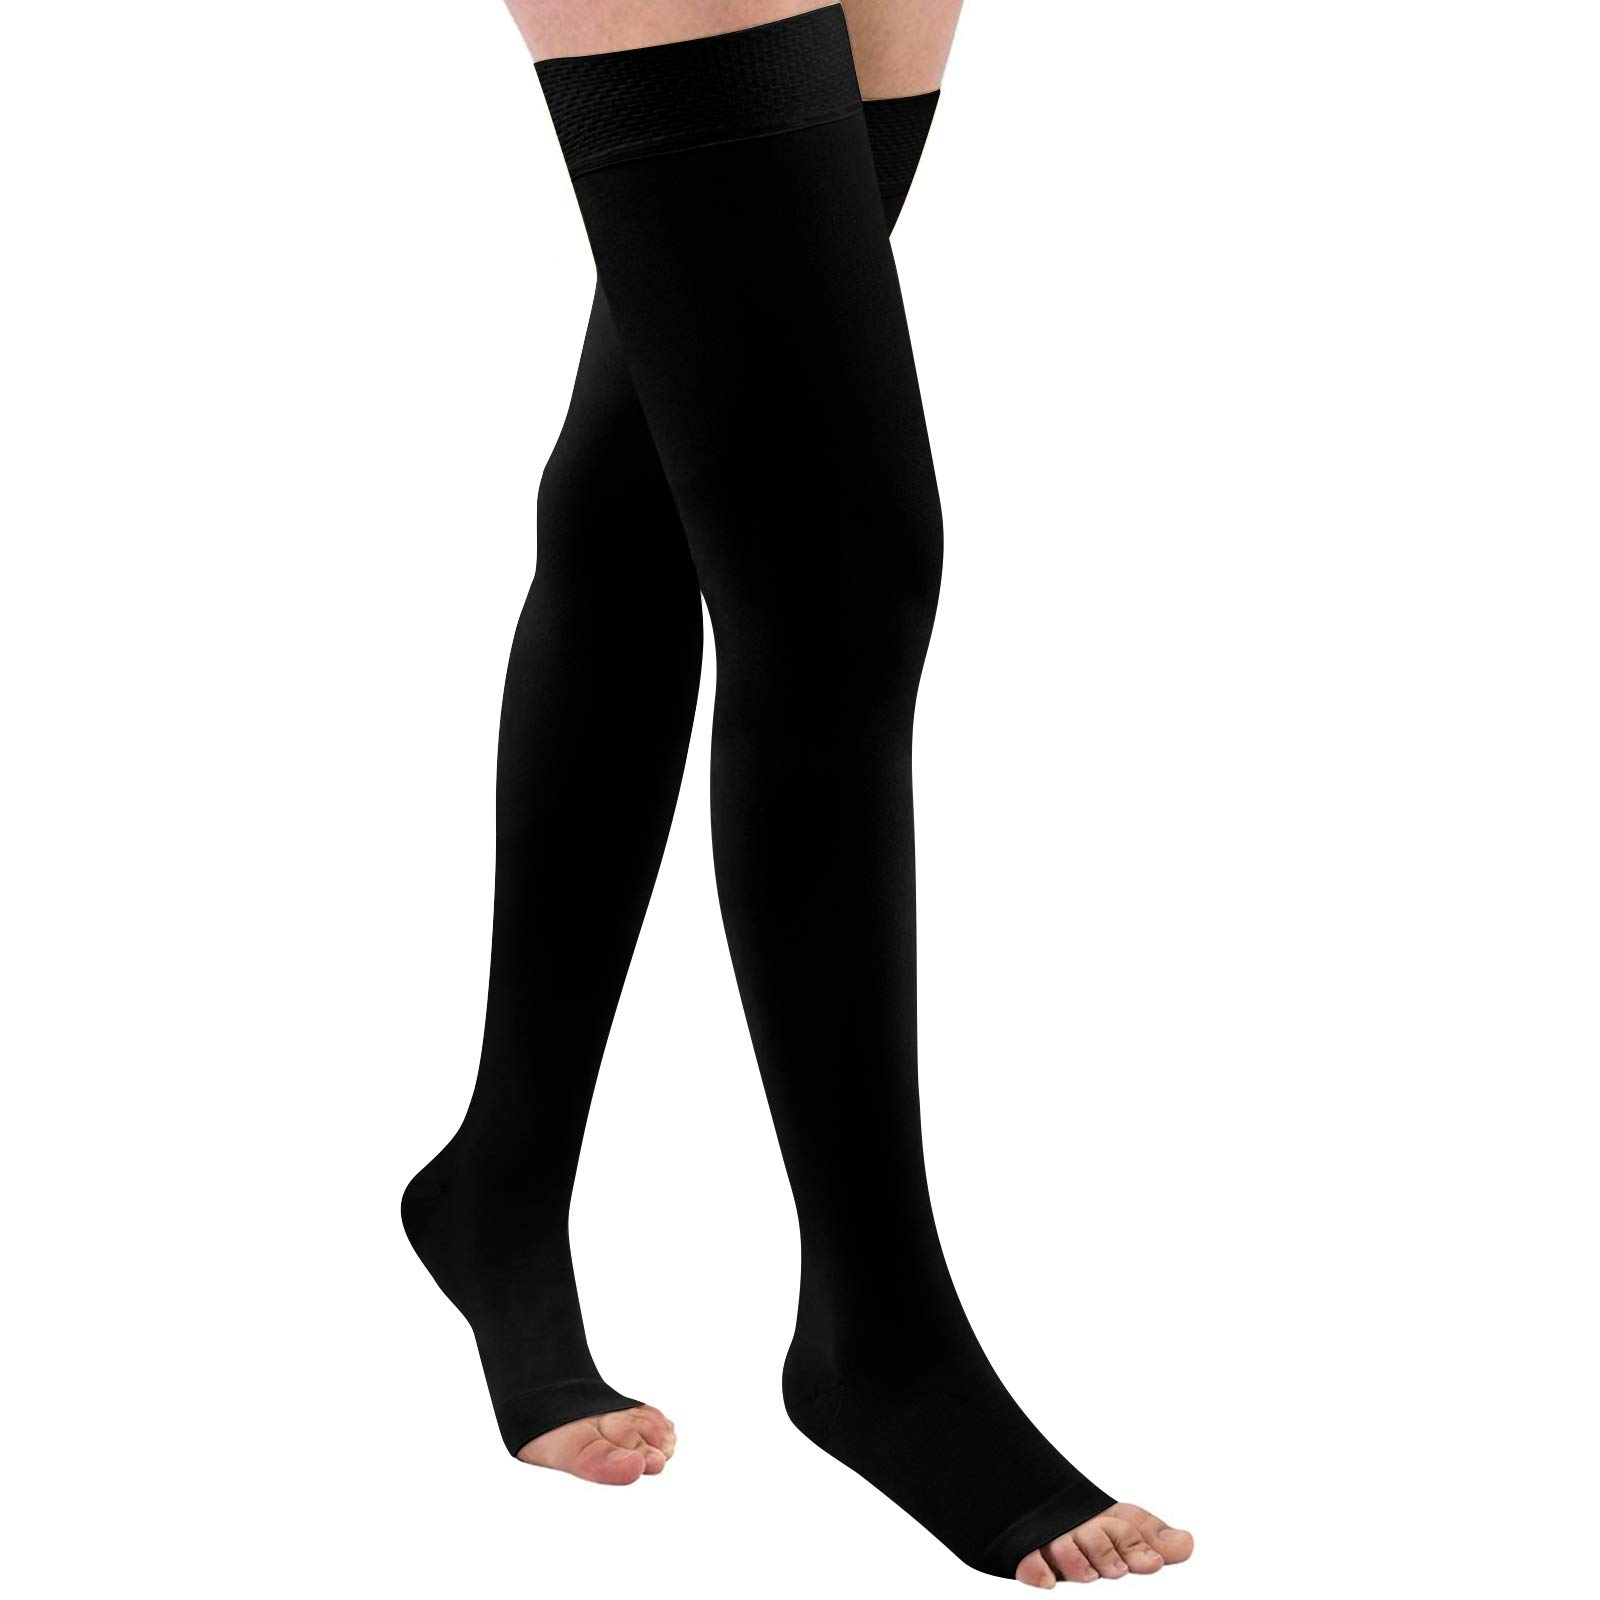 Medical Compression Stockings - Thigh High - 20 -30mmHG